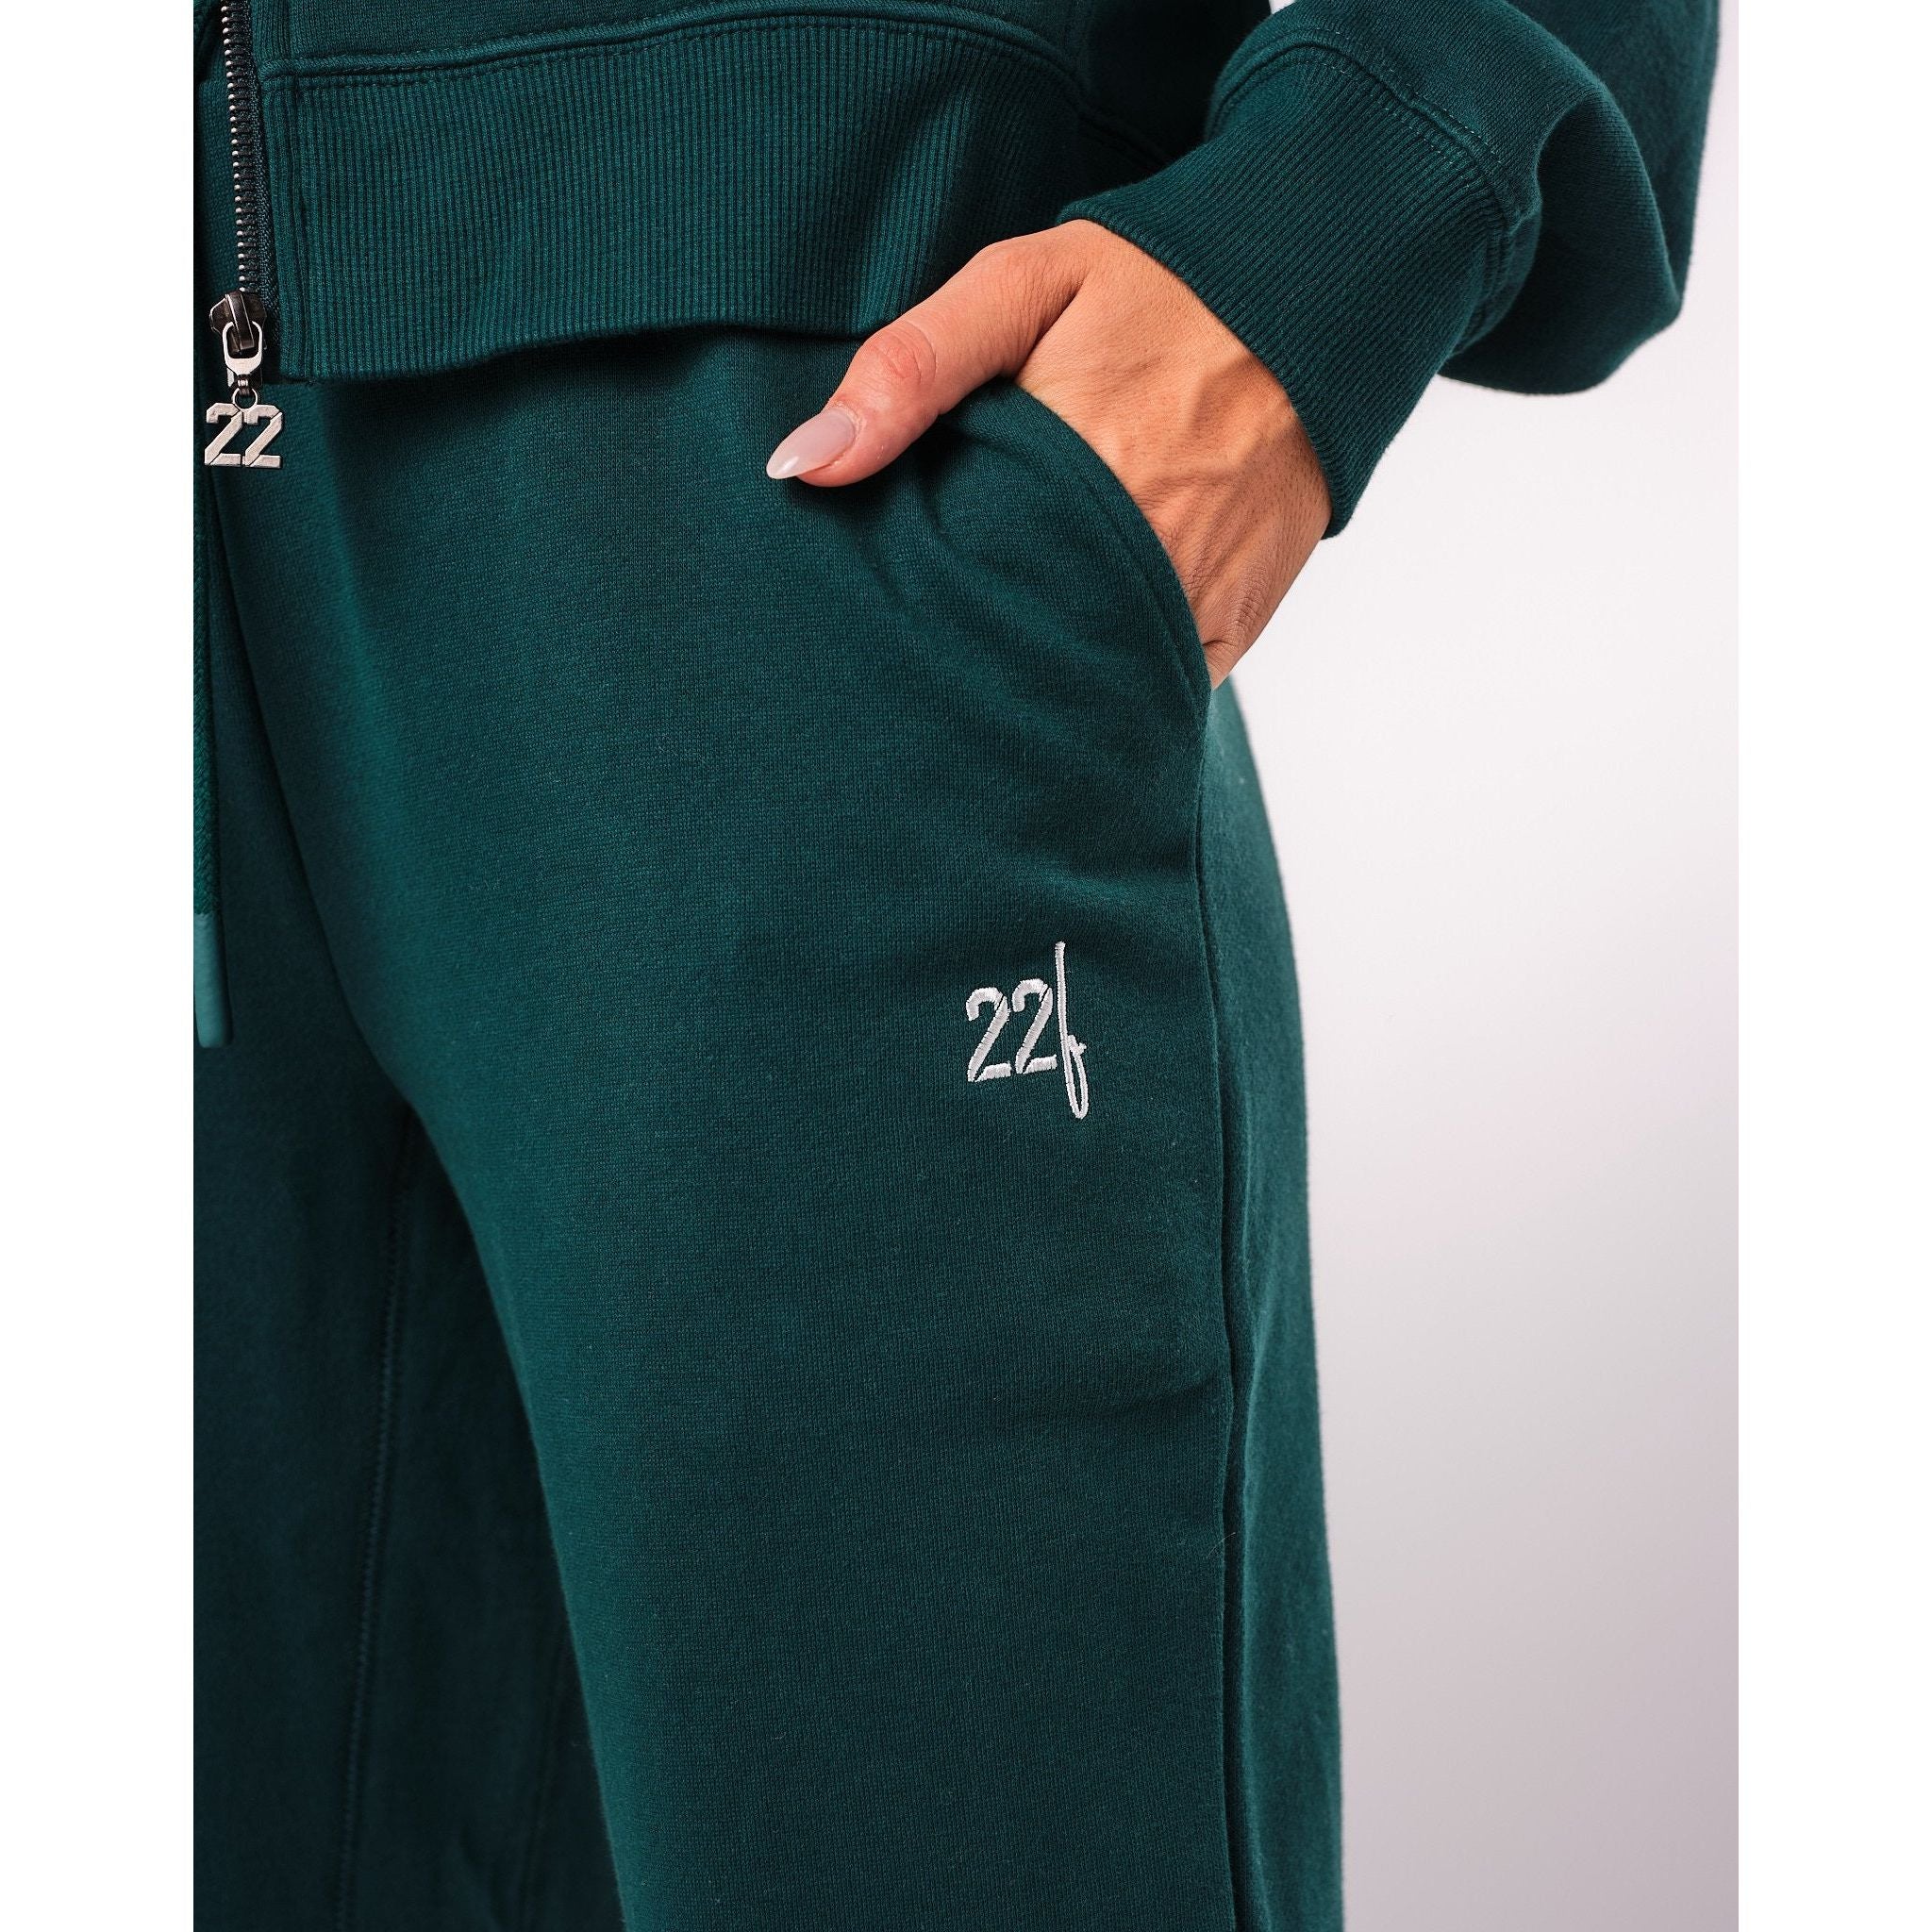 22 Fresh - Loose Fit Heavy Weight Fleece Sweatpant in Greenbacks-SQ0772087